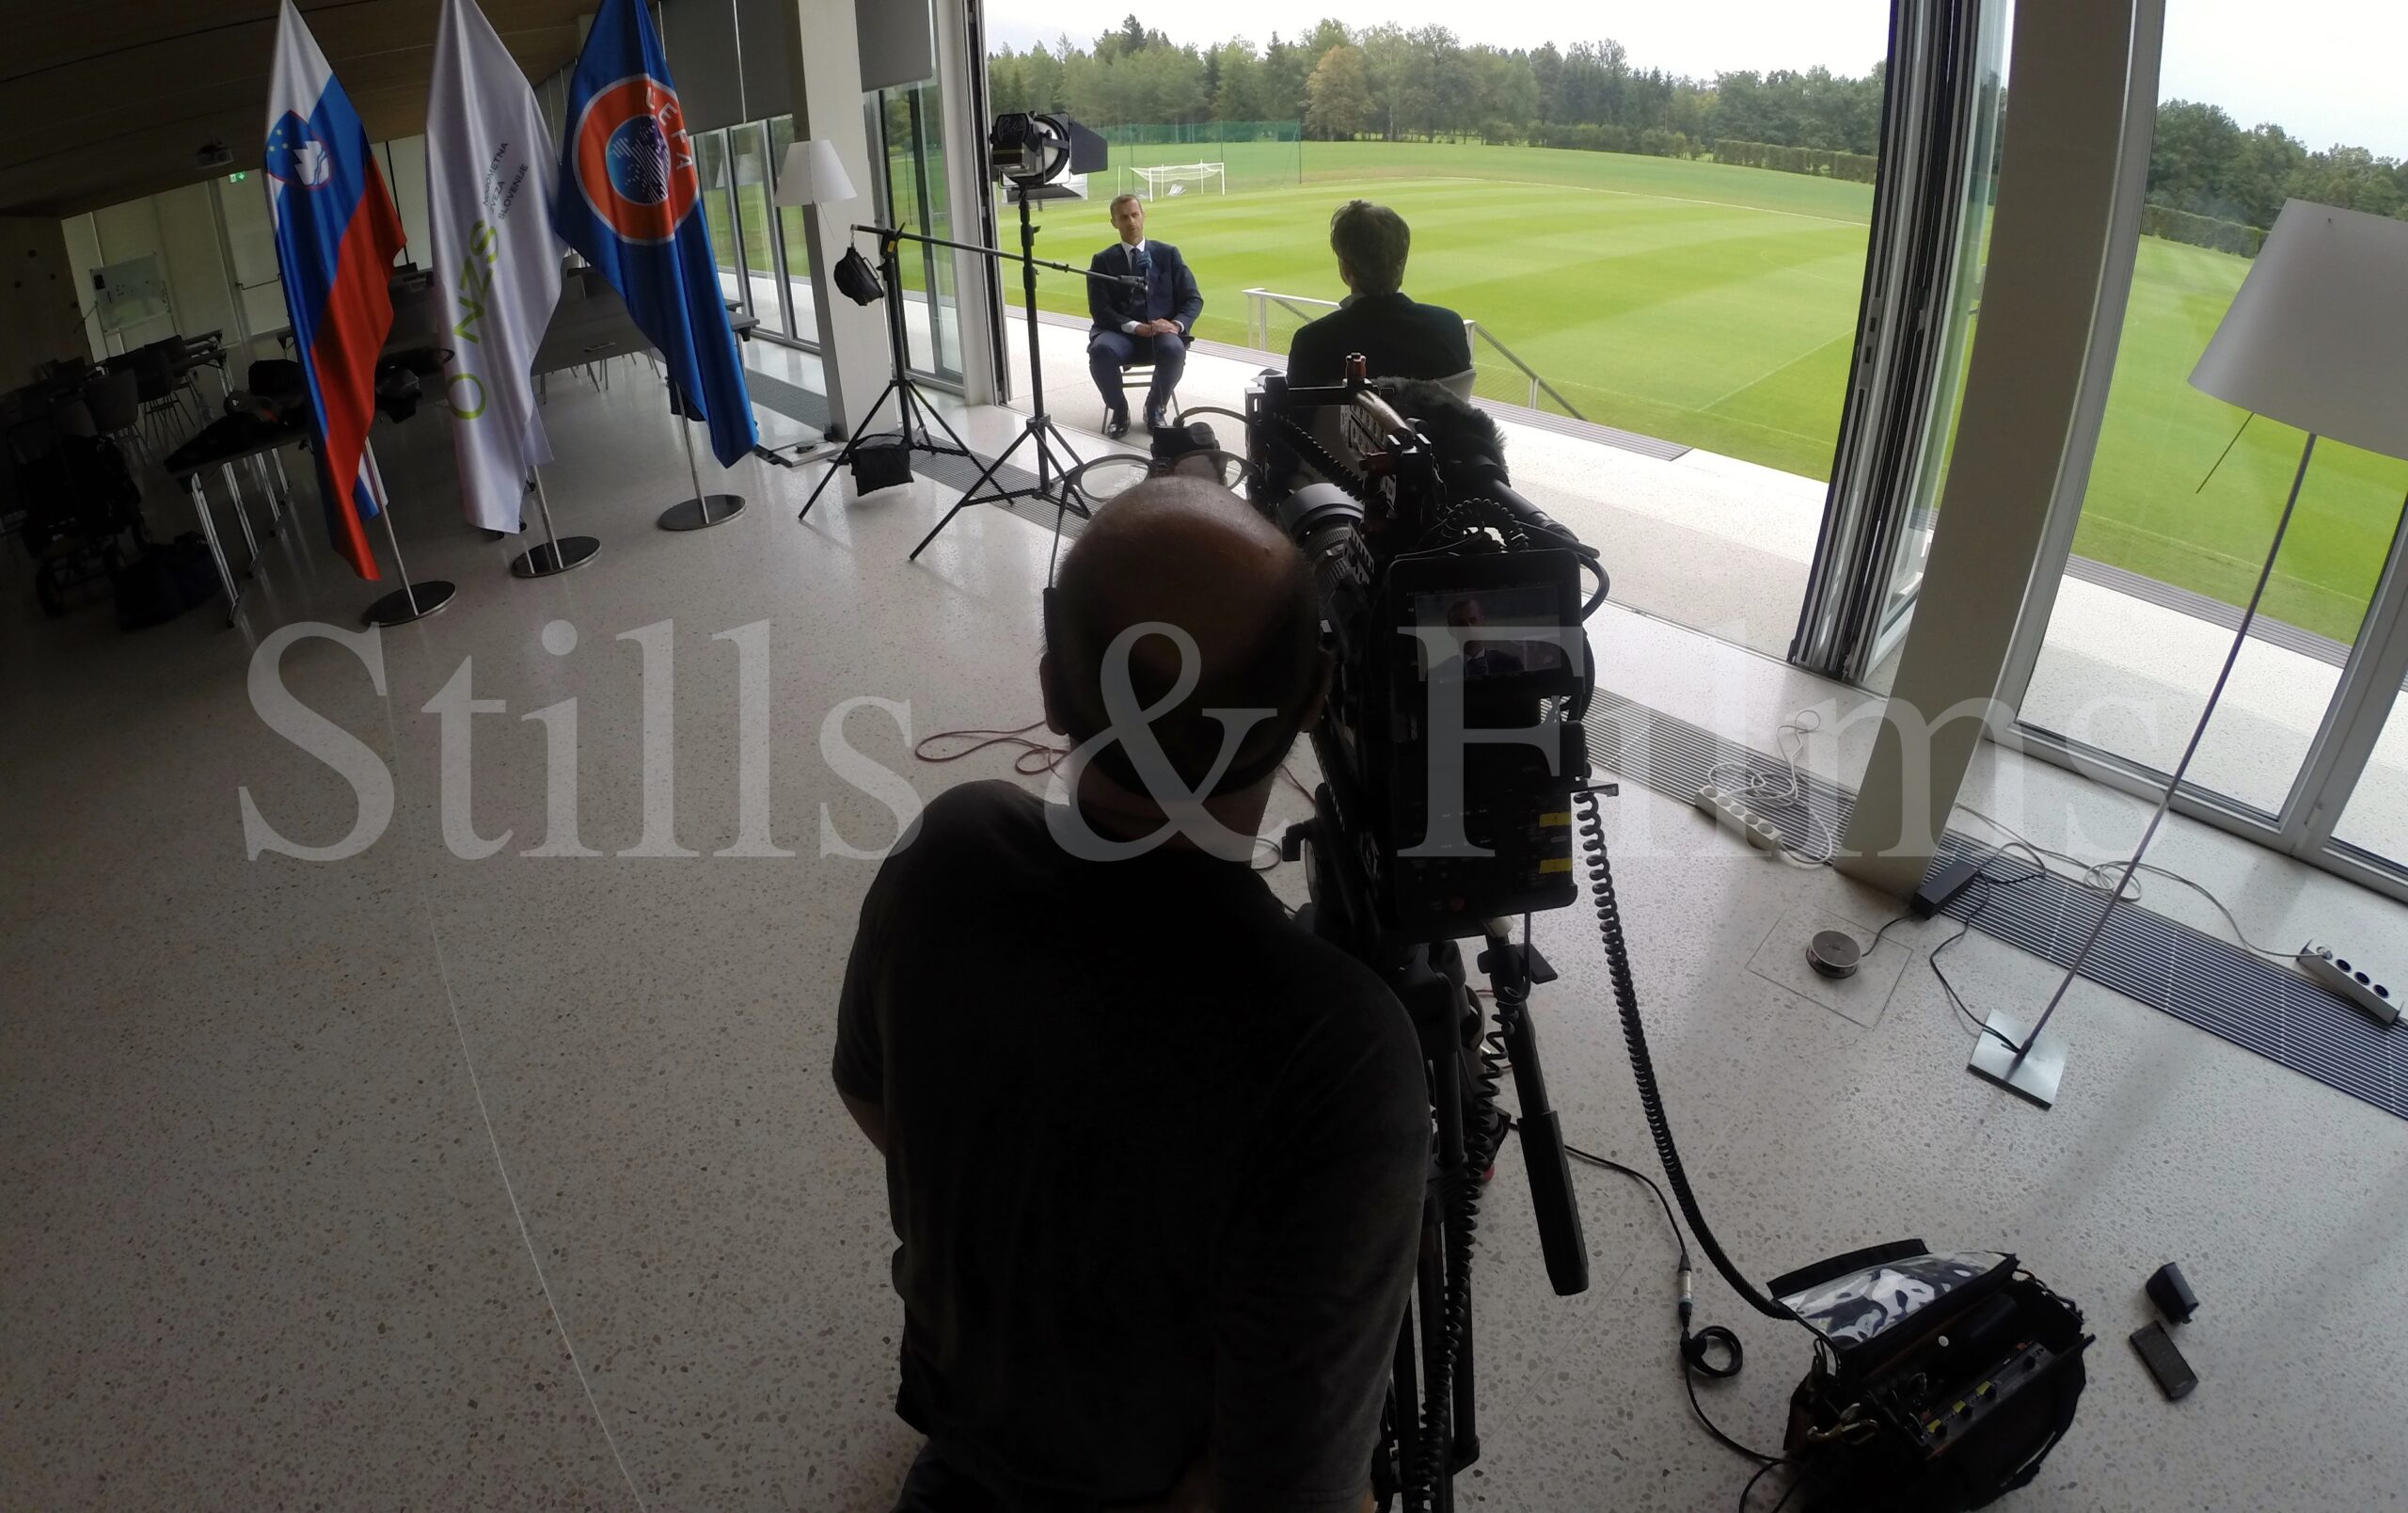 Our local video crew in Ljubljana, Slovenia interviewing UEFA President Aleksander Ceferin for ARD